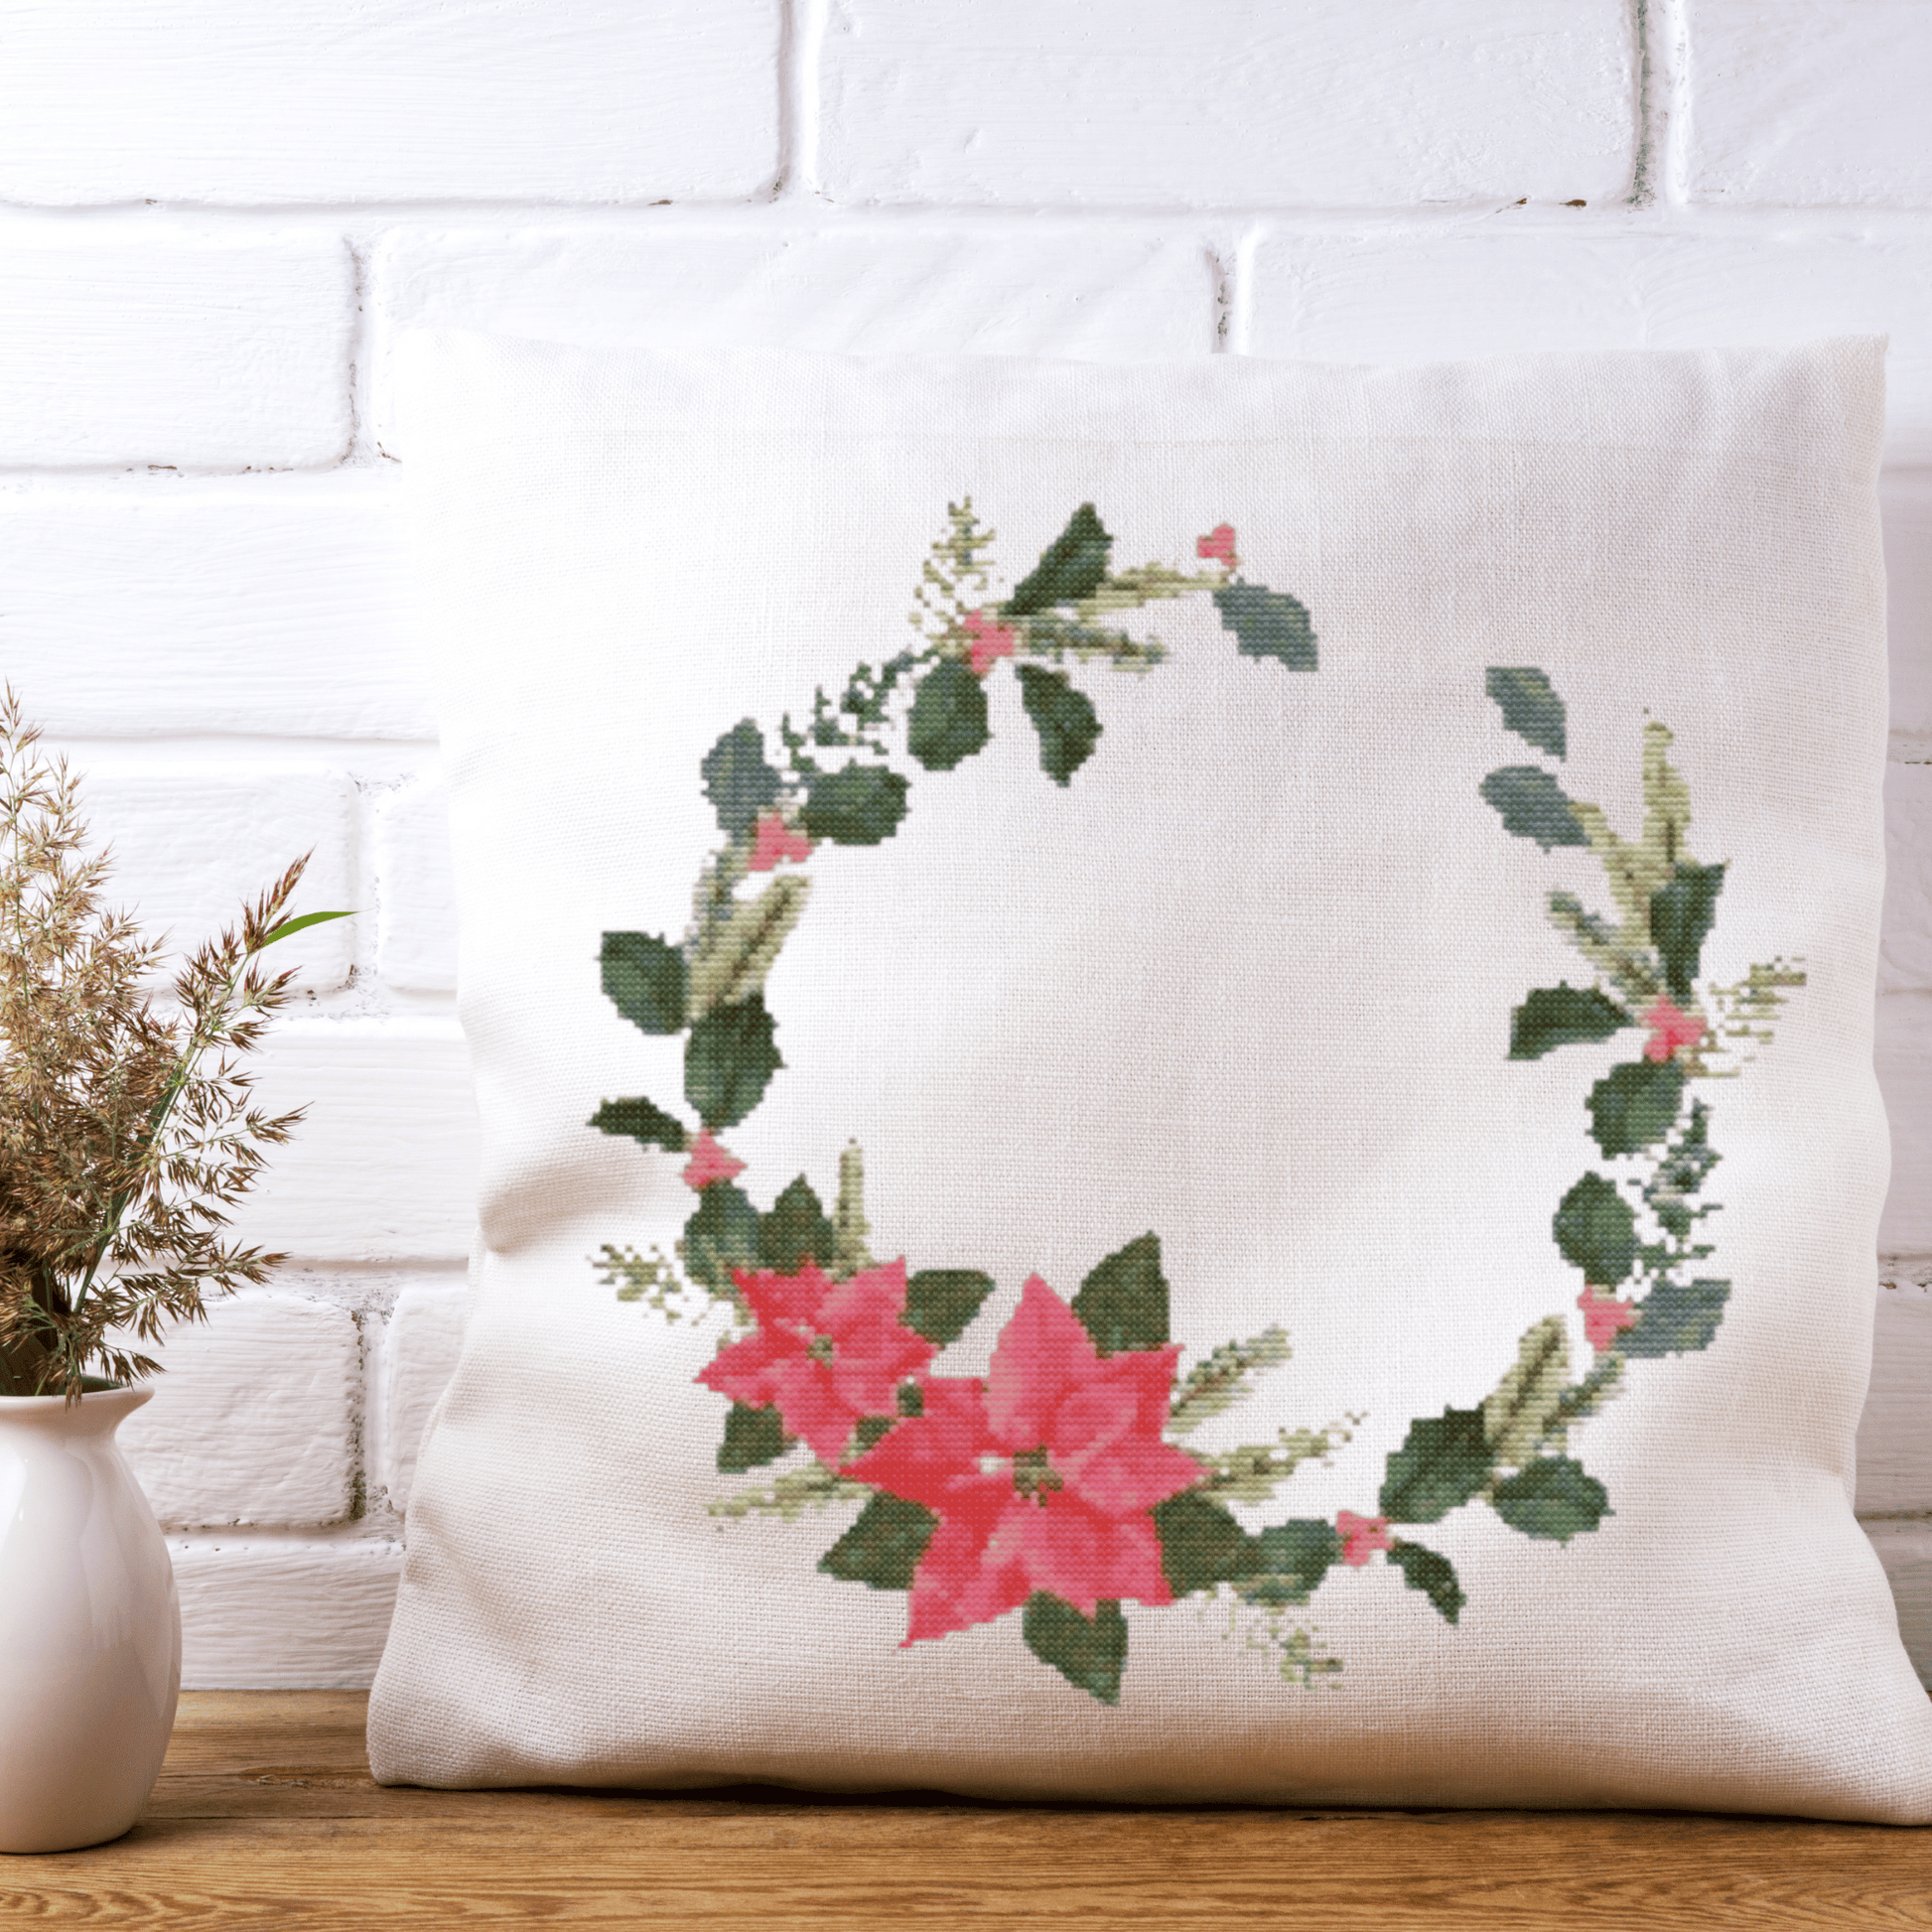 Christmas Wreath With Poinsettias Cross Stitch Pattern | Christmas Wreath Cross Stitch Chart | Christmas Cross Stitch Pattern